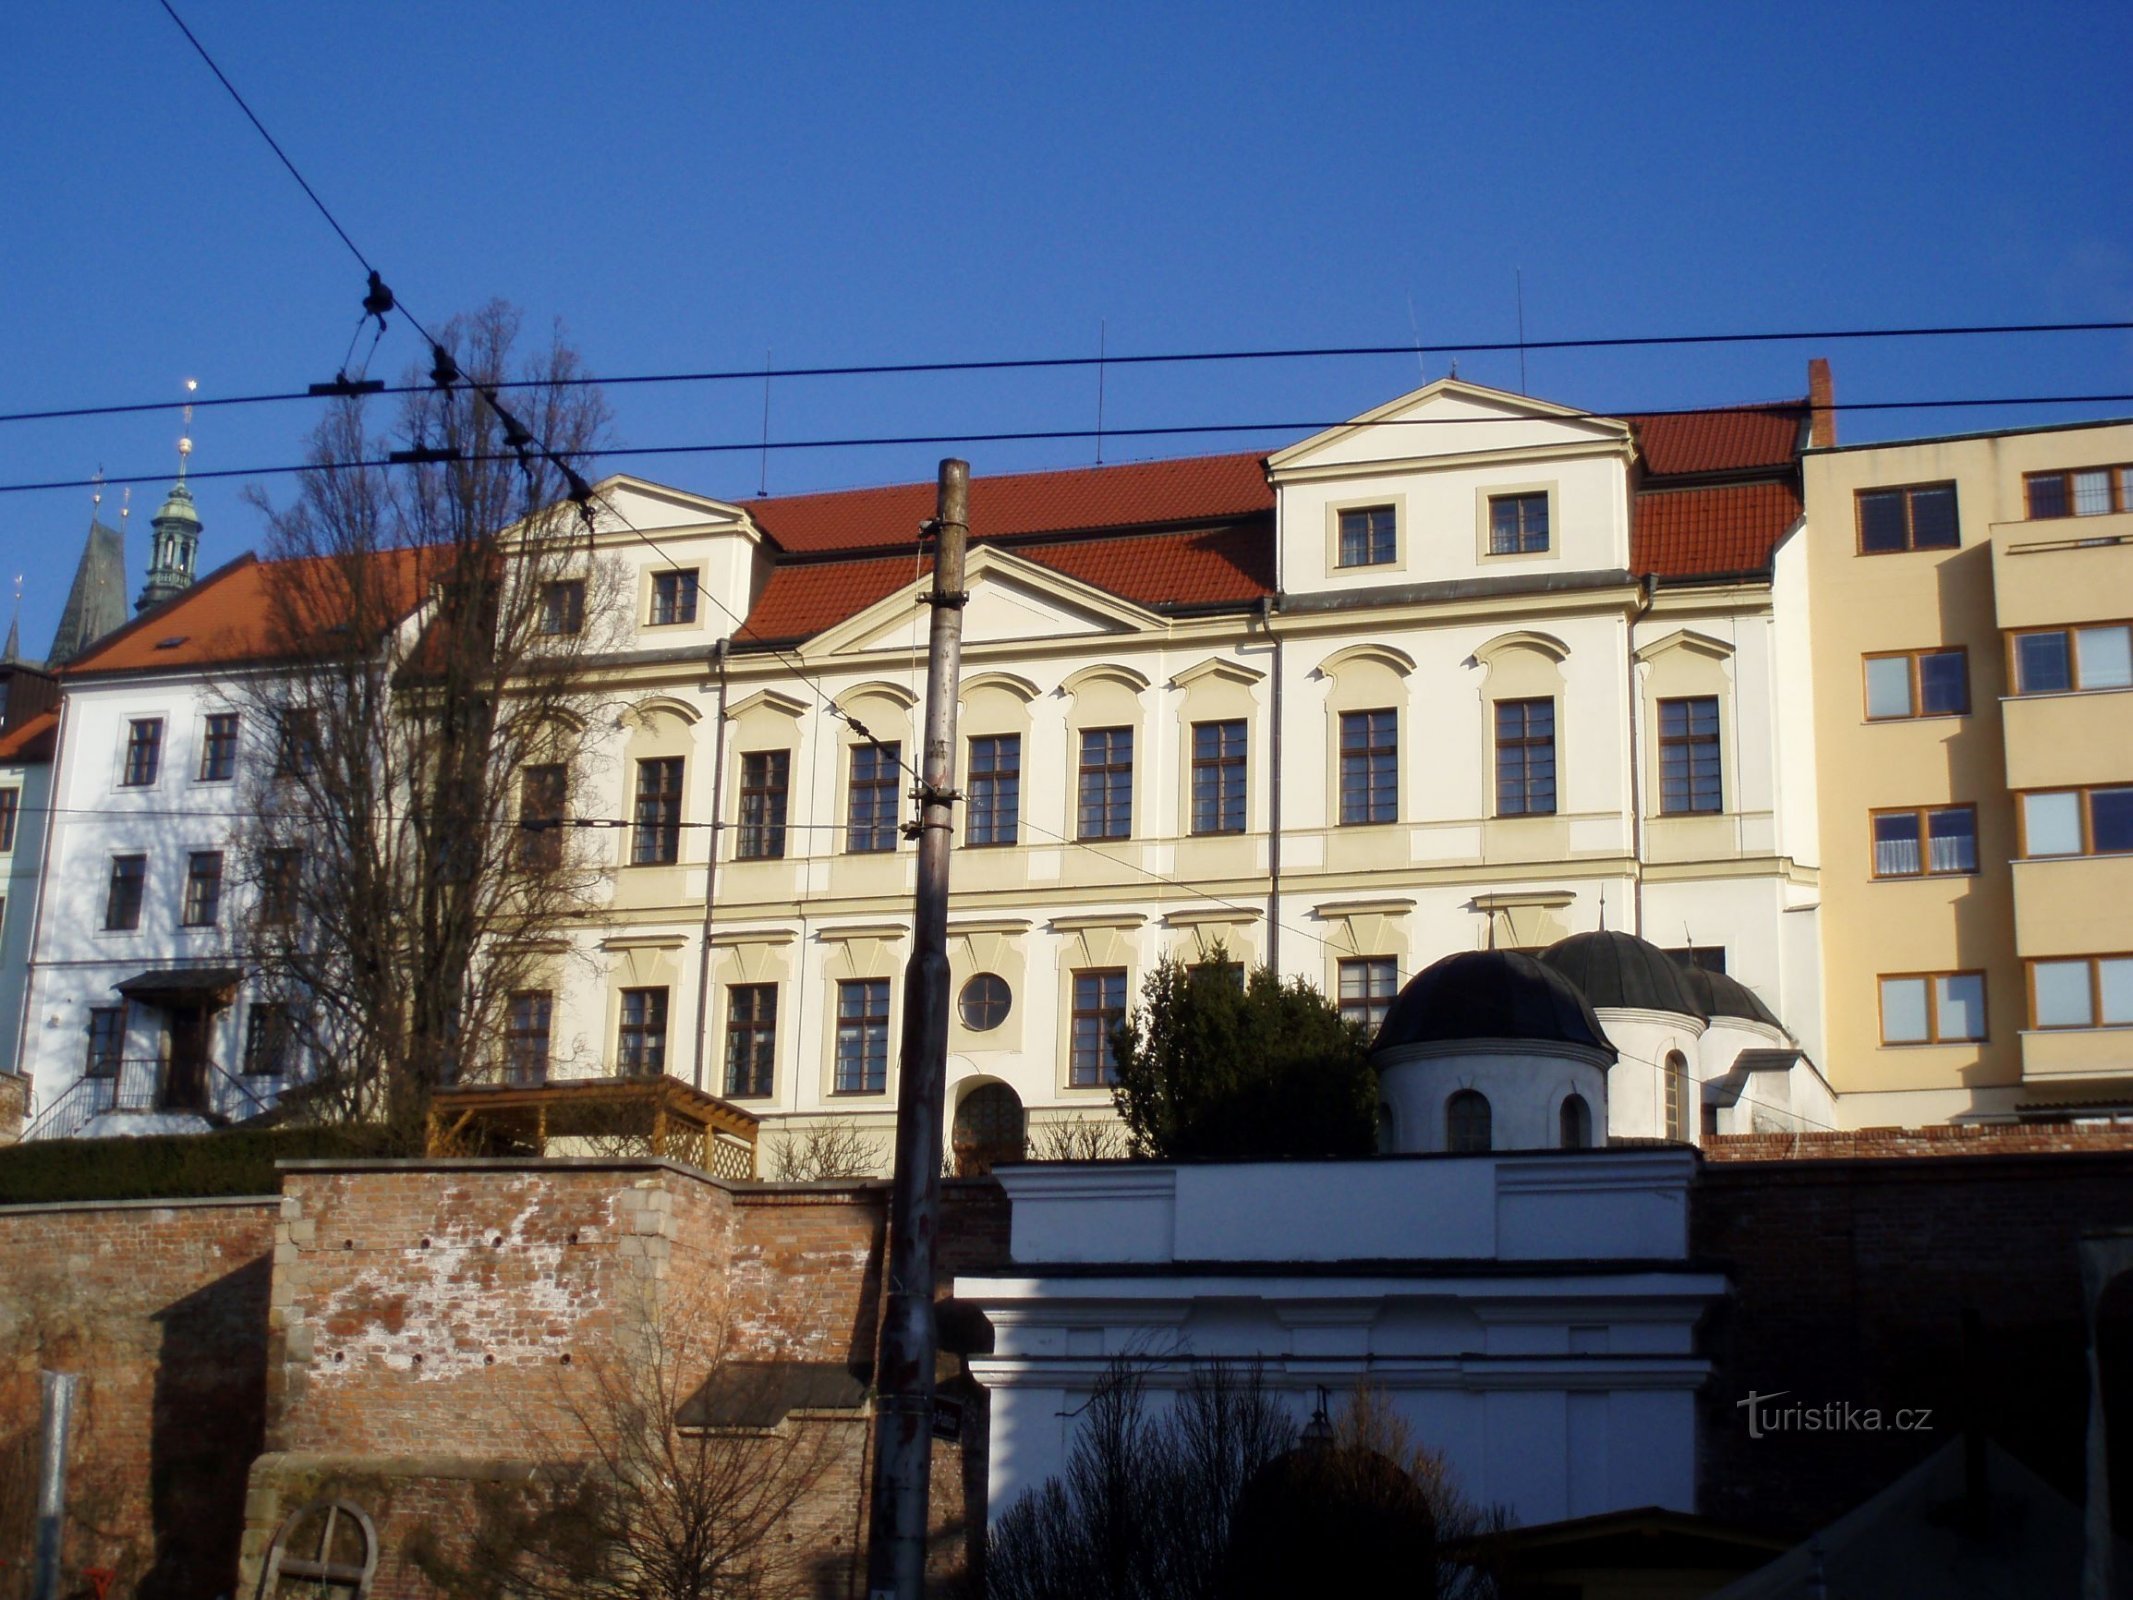 Епископская резиденция (Градец Кралове, 21.3.2011)